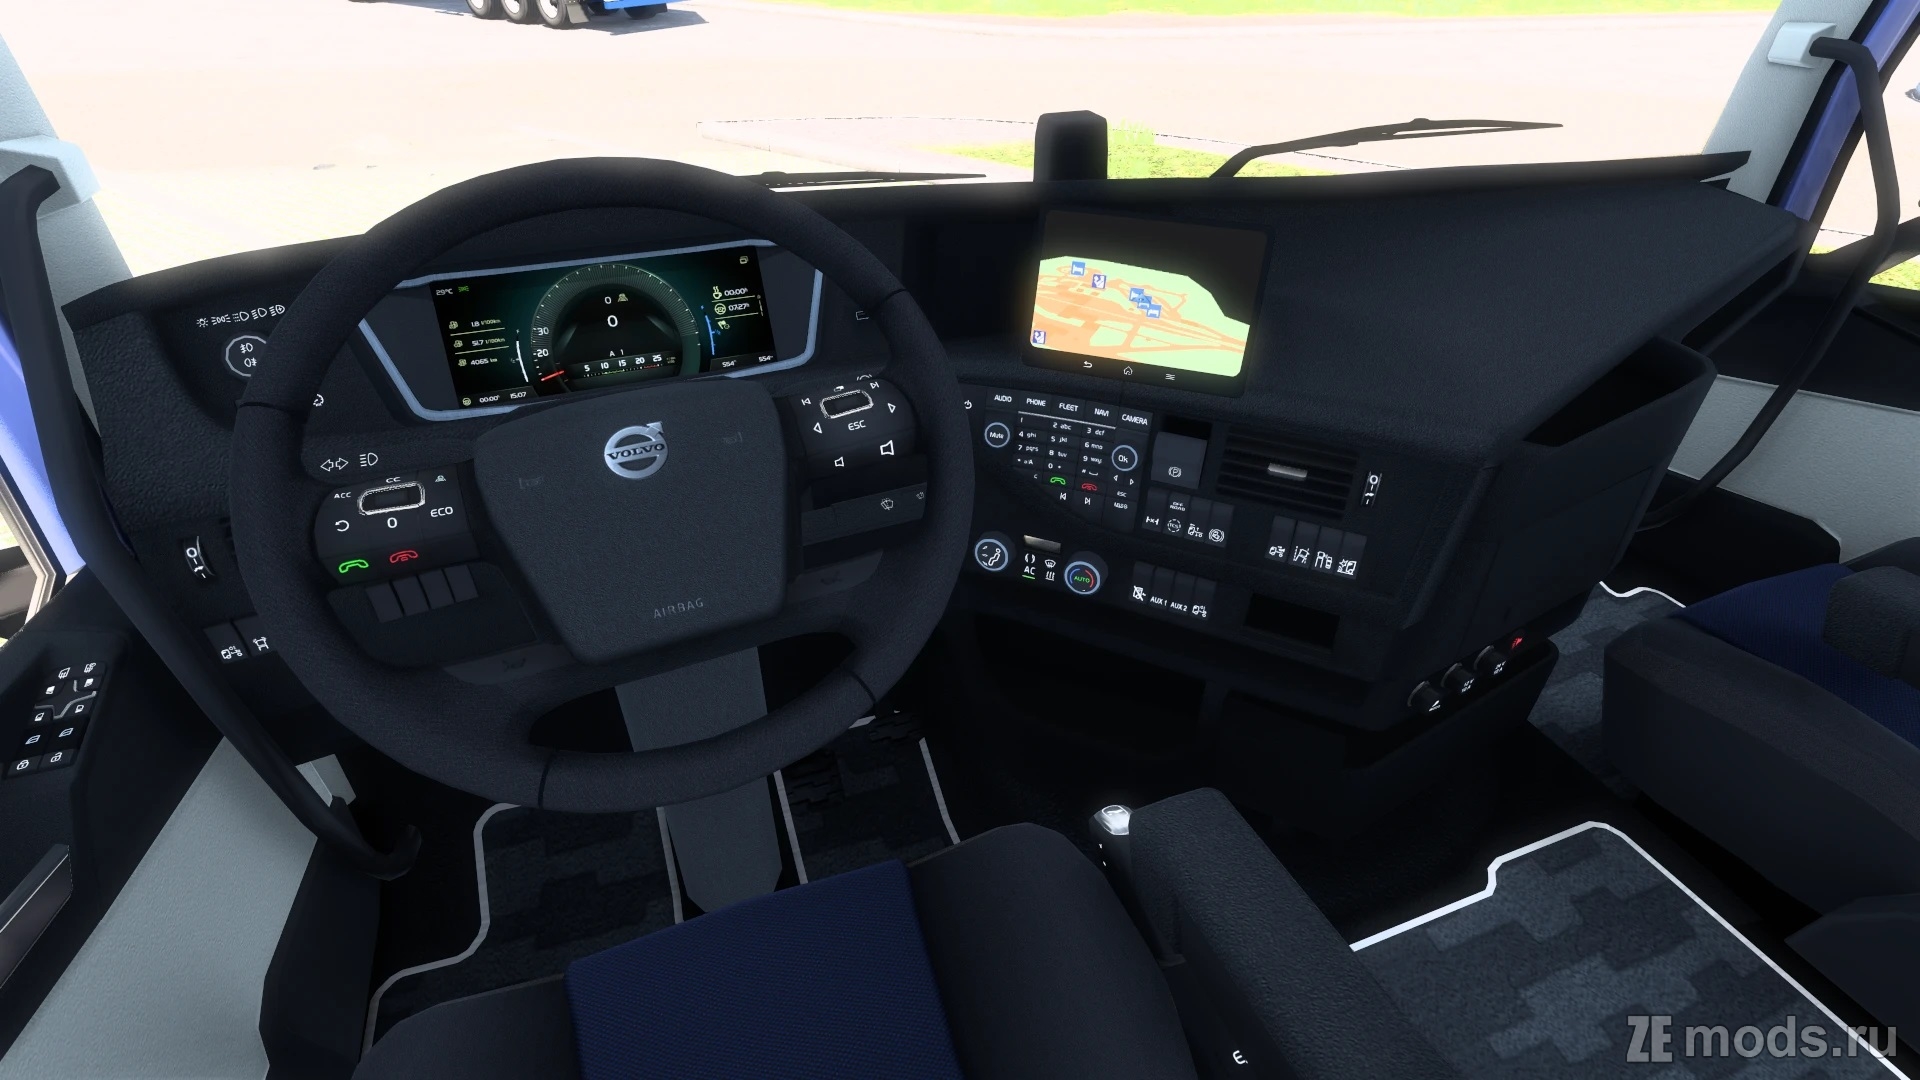 Мод Volvo FH5 для Euro Truck Simulator 2